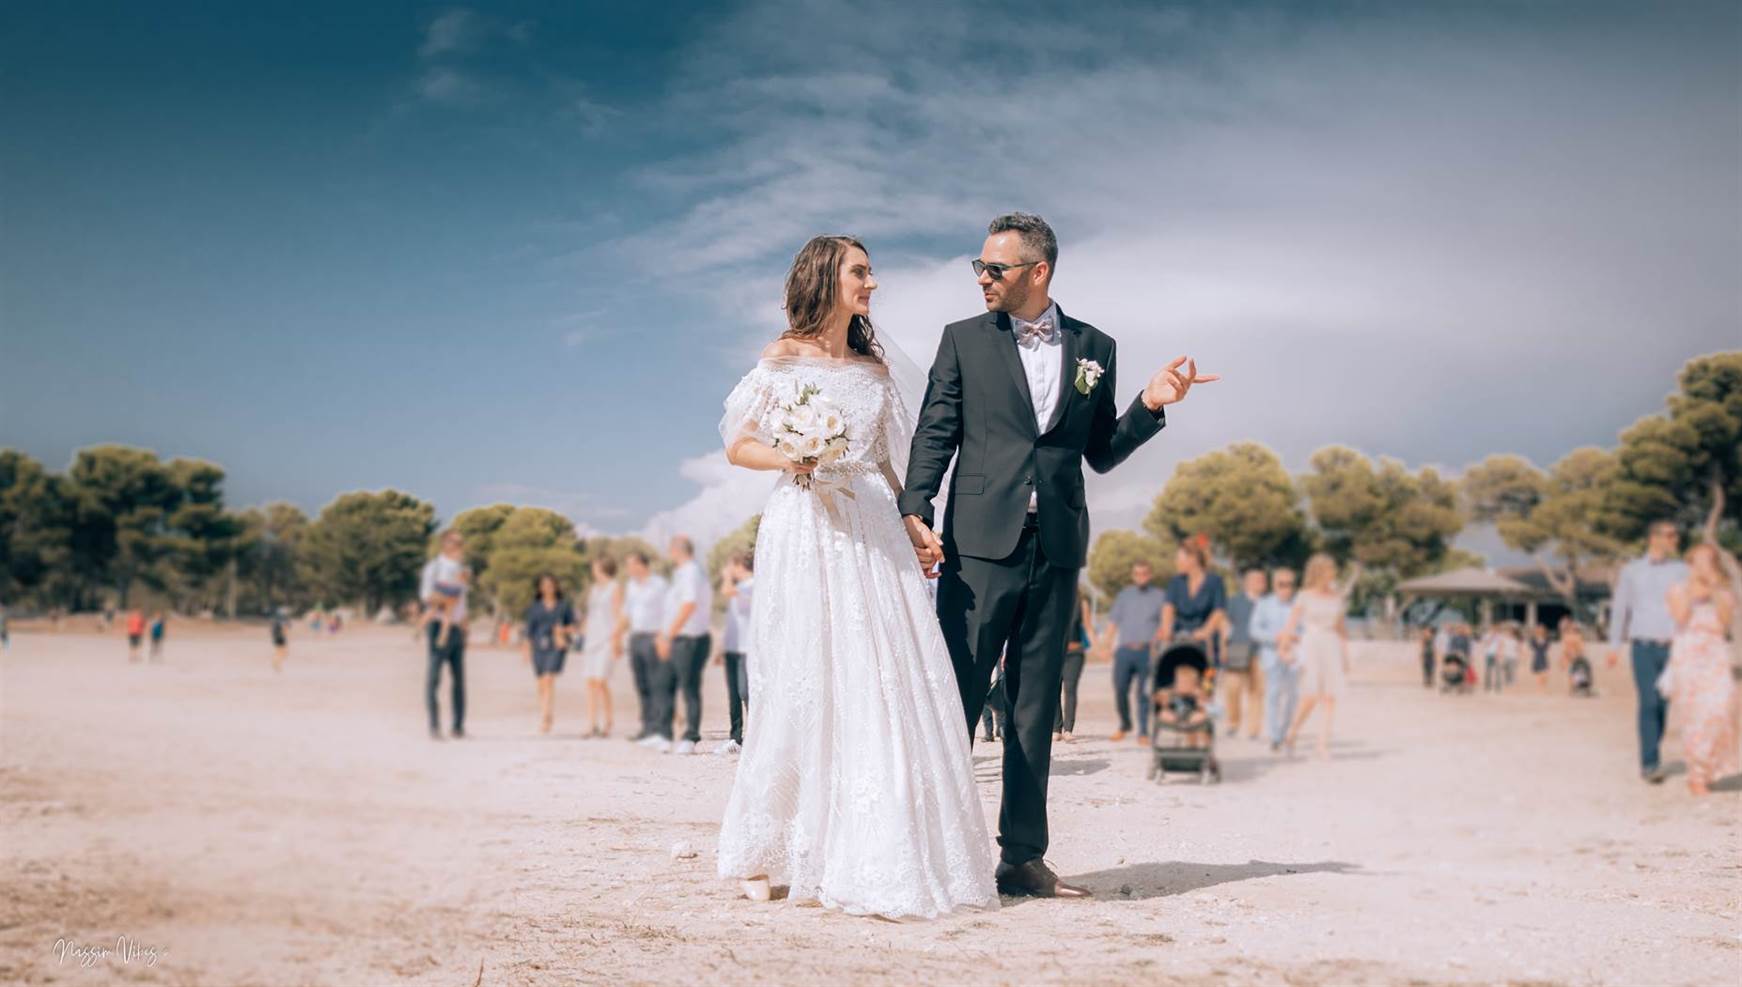 Wedding Photographer Aix en Provence: Capturing Love's Embrace 48